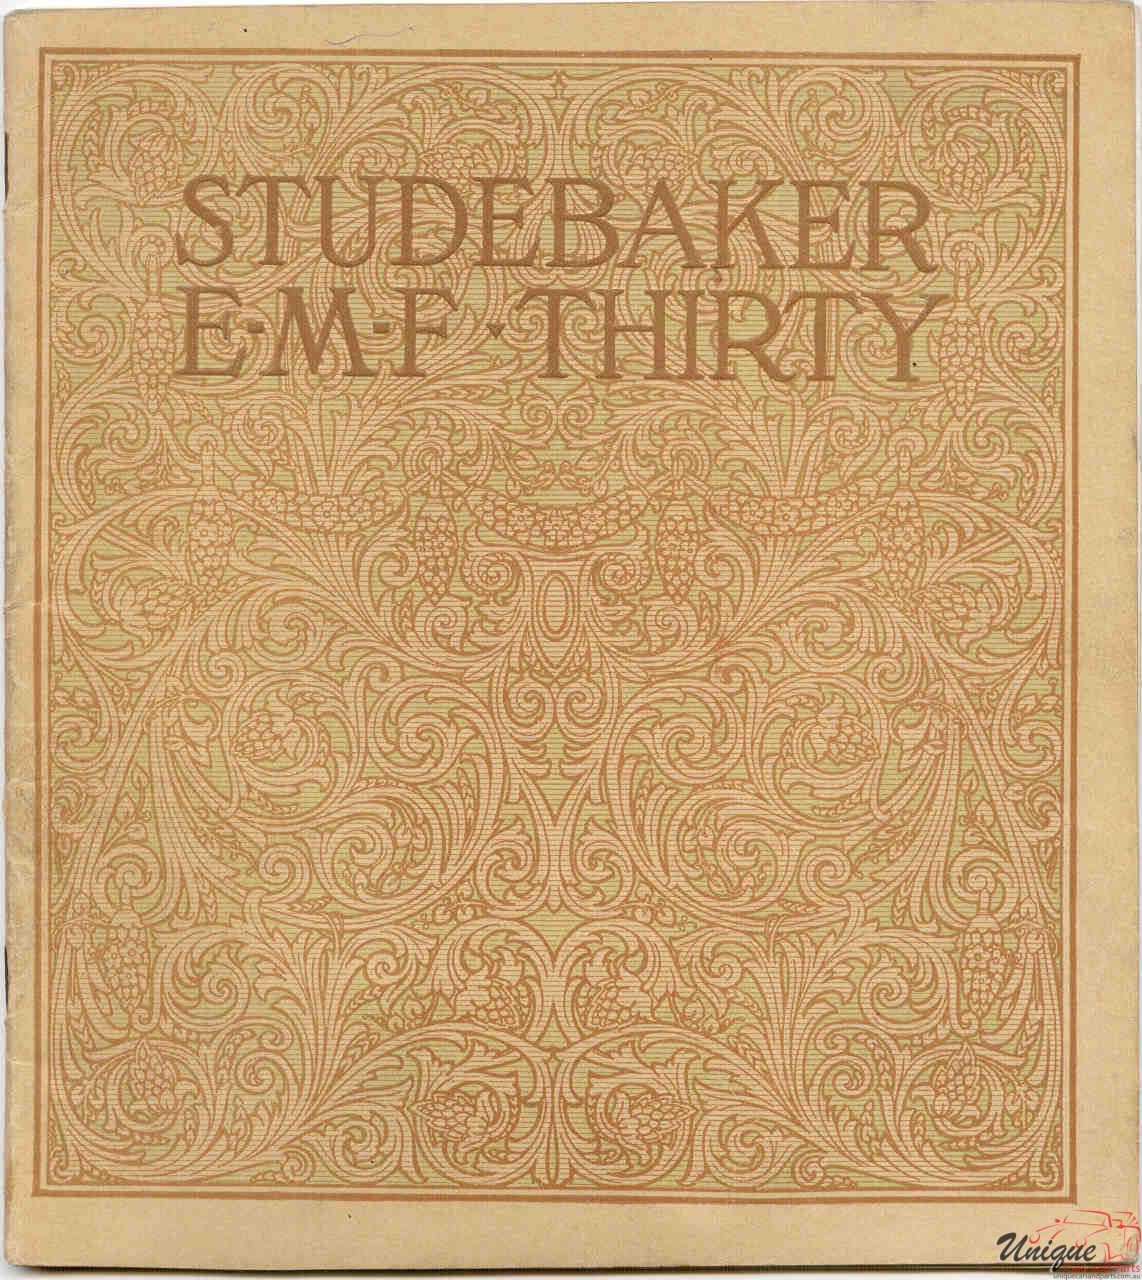 1912 Studebaker E-M-F 30 Brochure